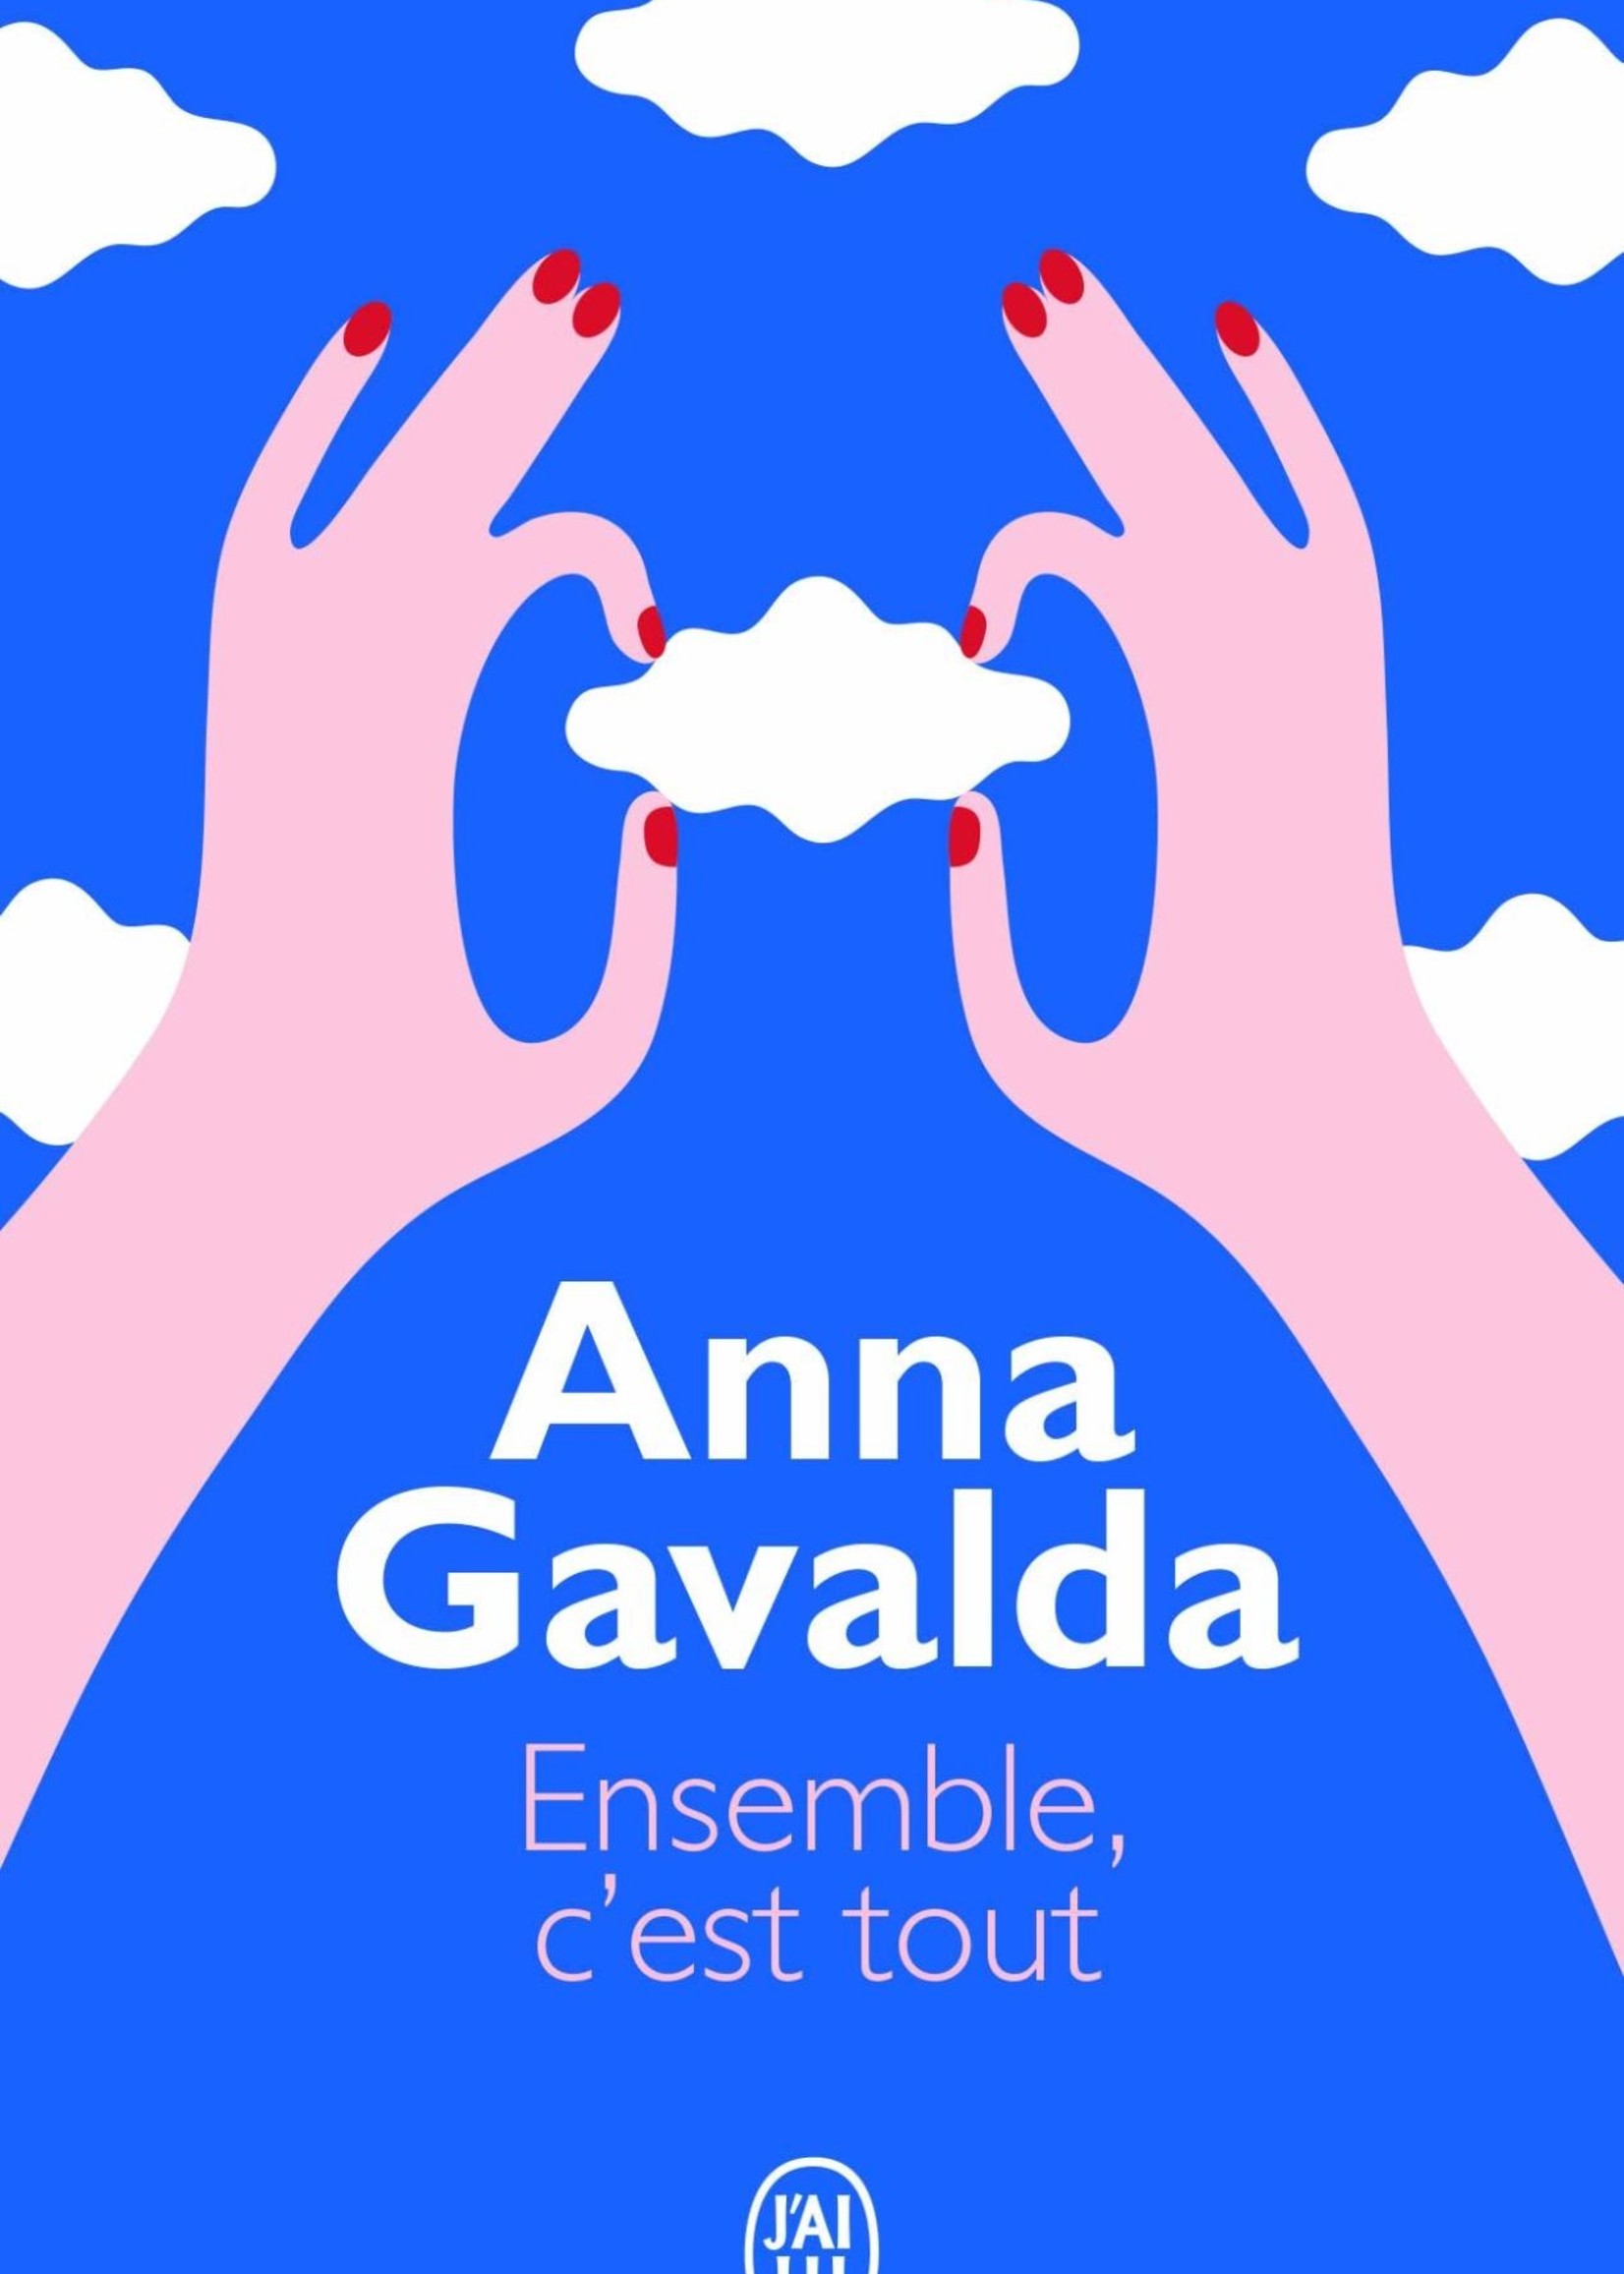 Ensemble, c'est tout by Anna Gavalda